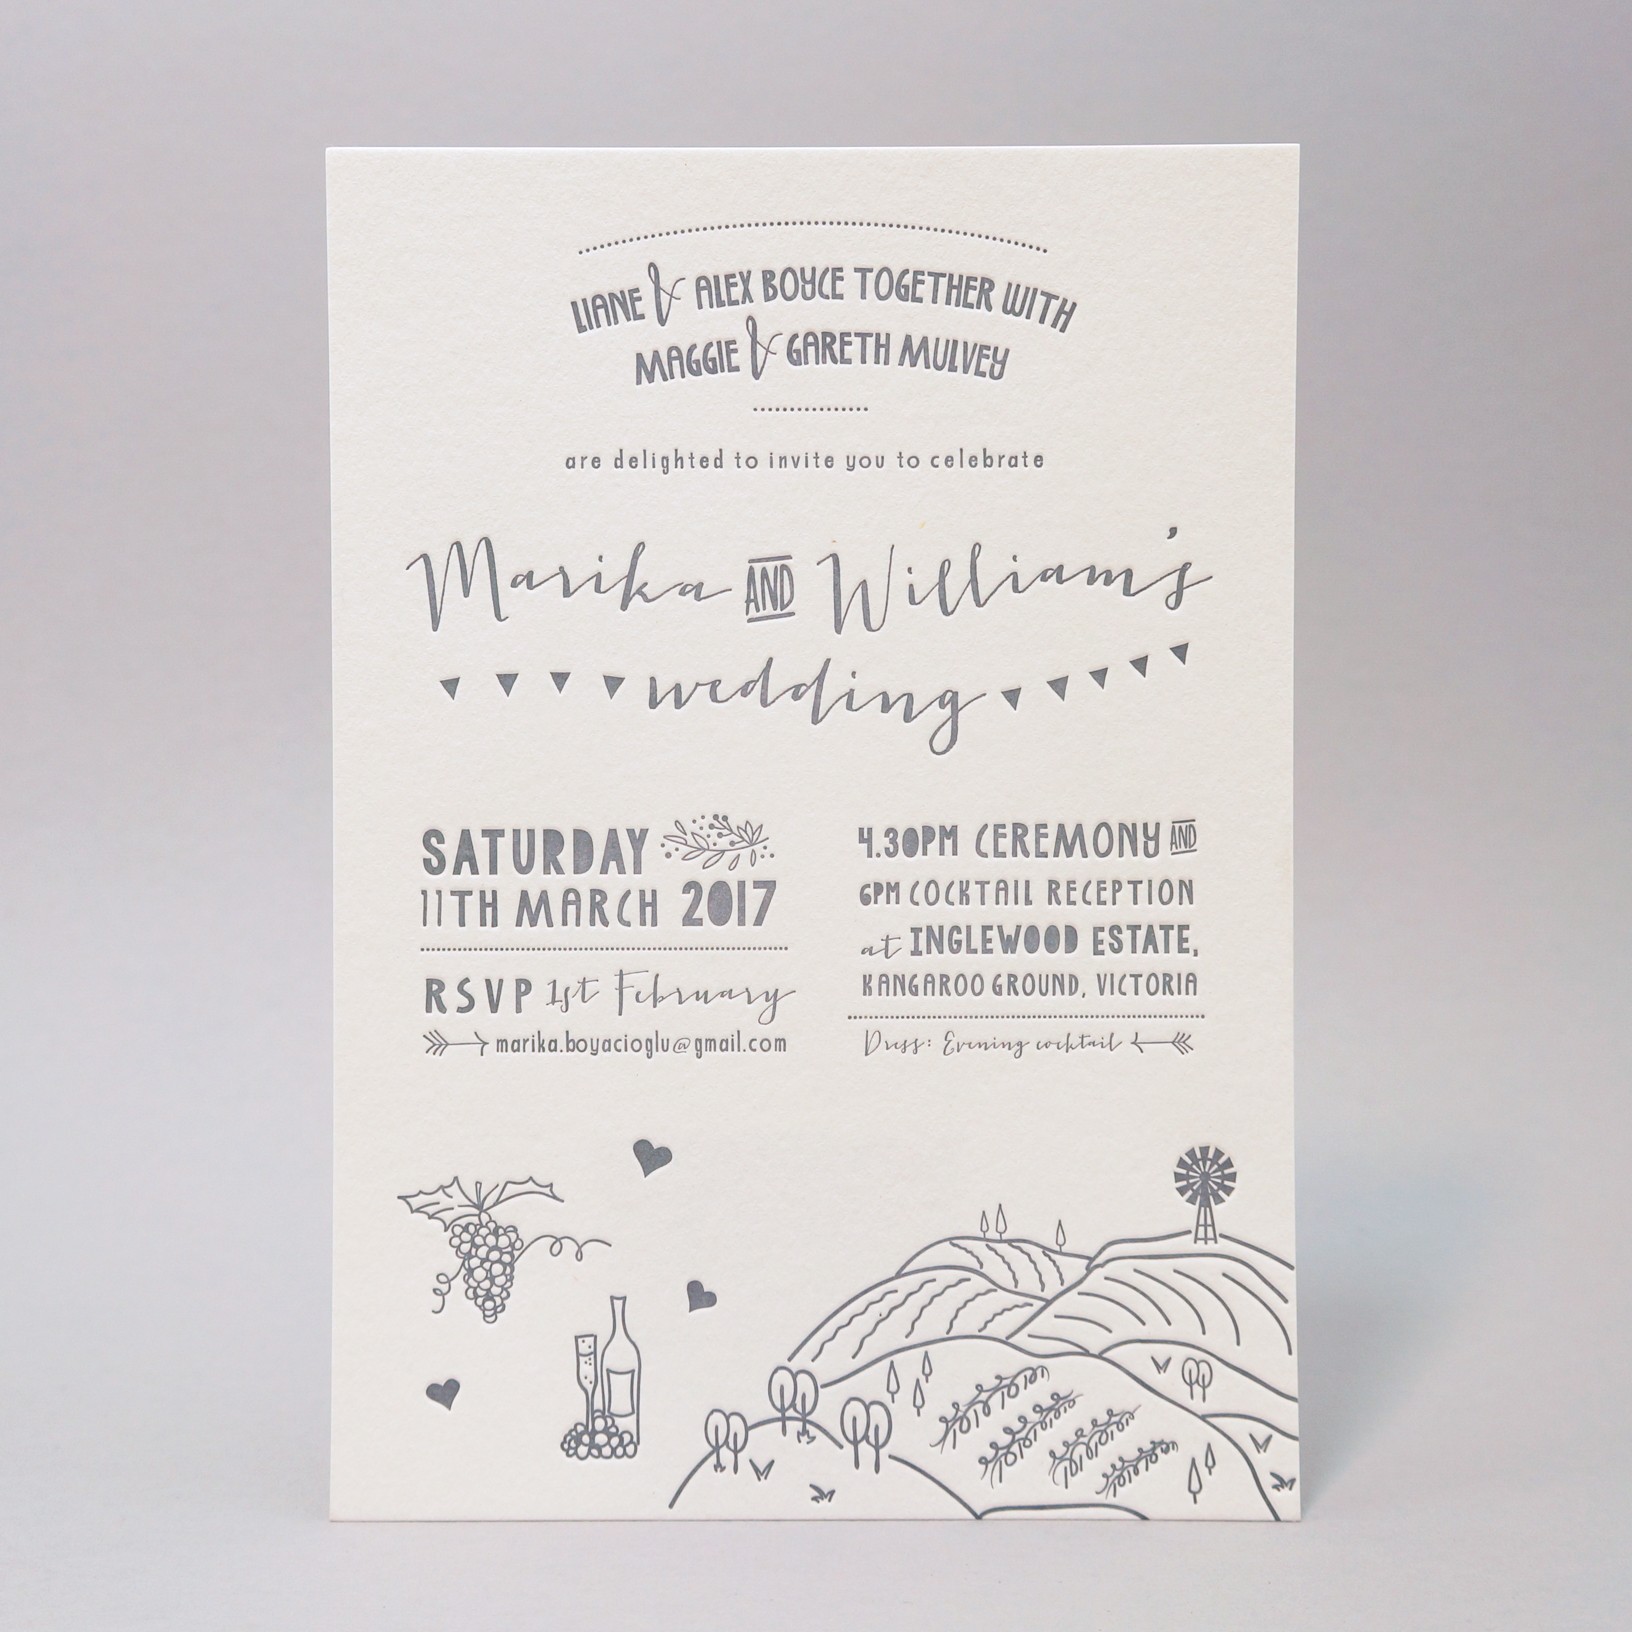 Letterpress-wedding-invitations-winery-vineyard-grey-marika+william